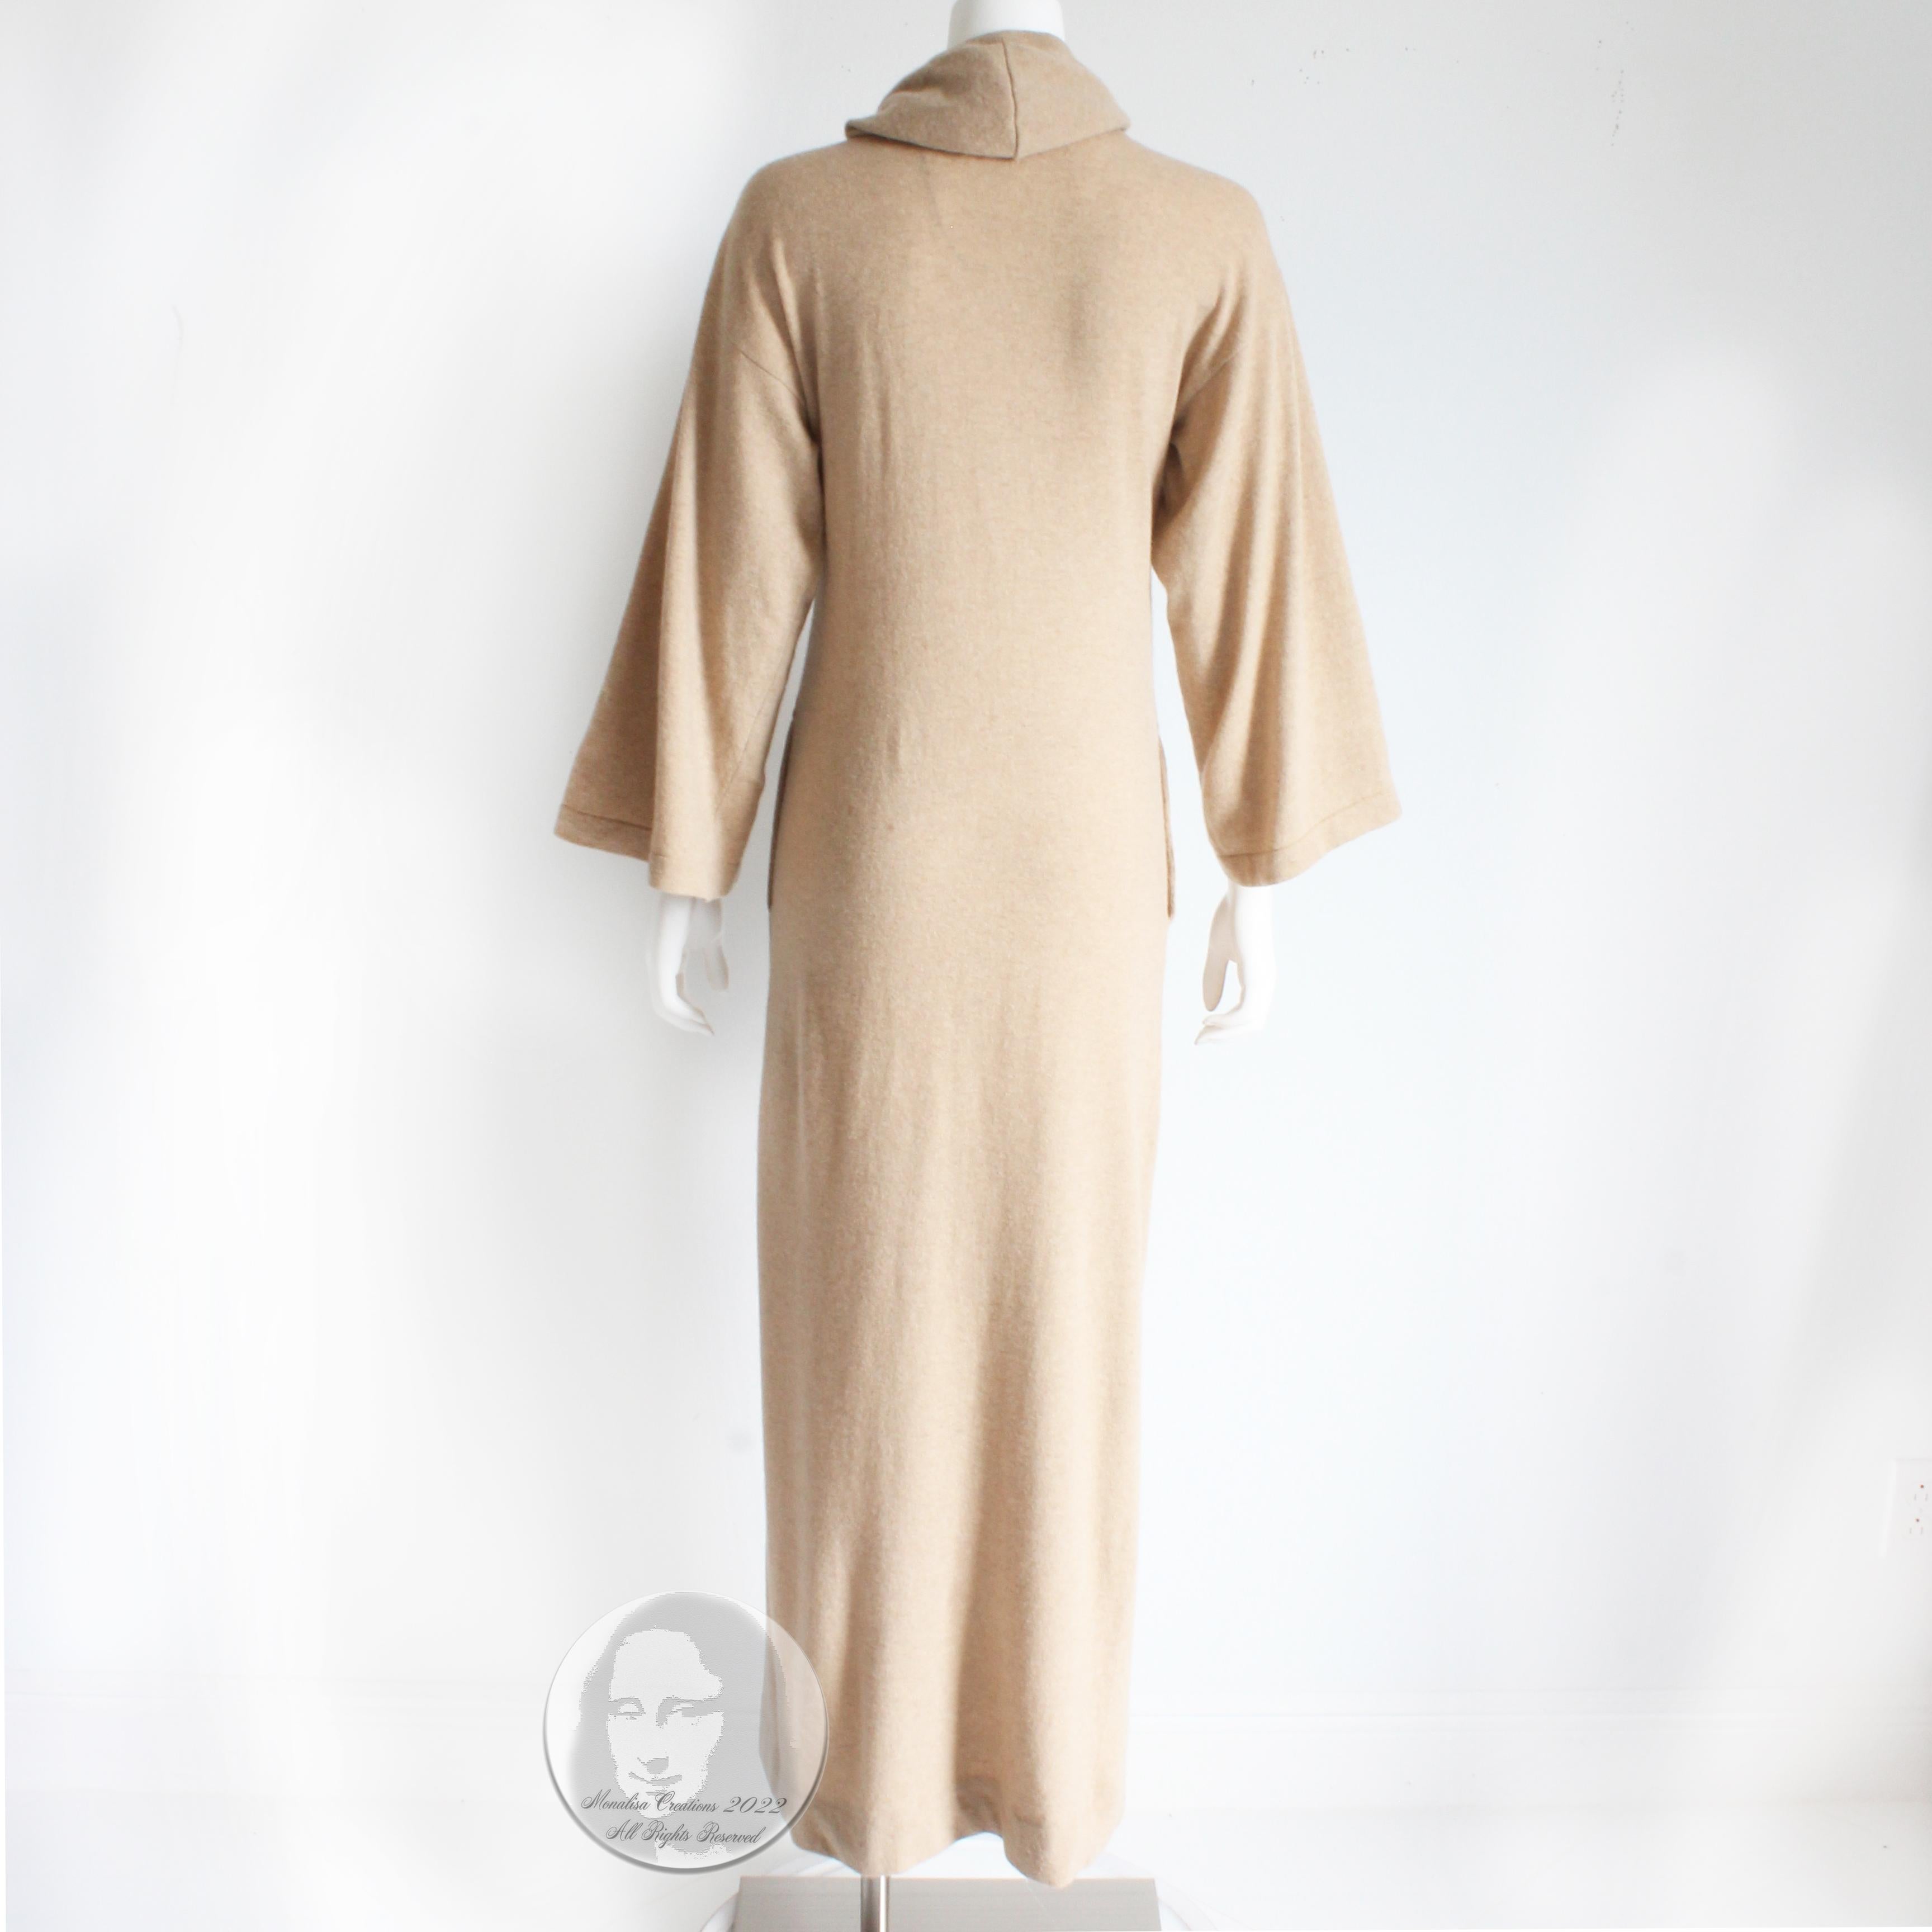 Bonnie Cashin Dress Maxi with Hood Cashmere Knit Kimono Style Sleeves Vintage 1